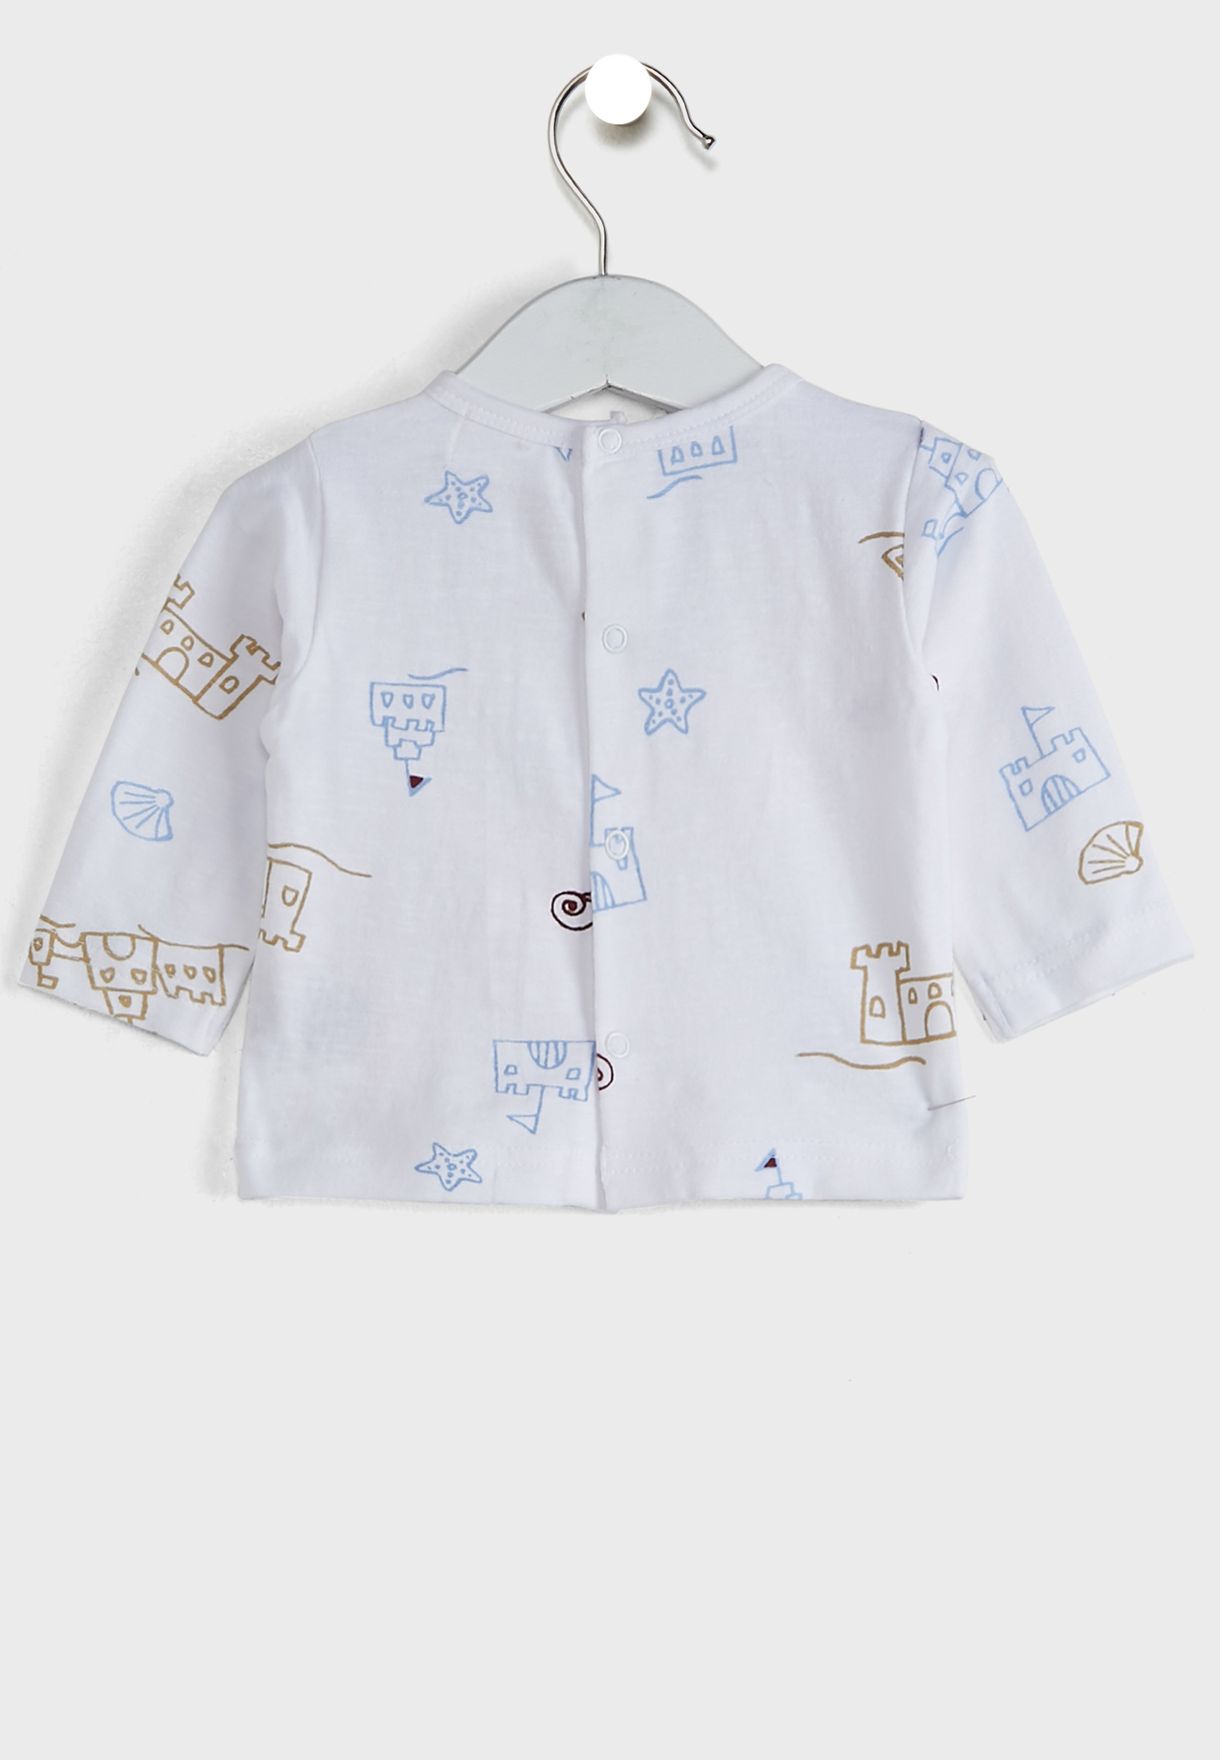 Infant Graphic T-Shirt + Pyjama Set